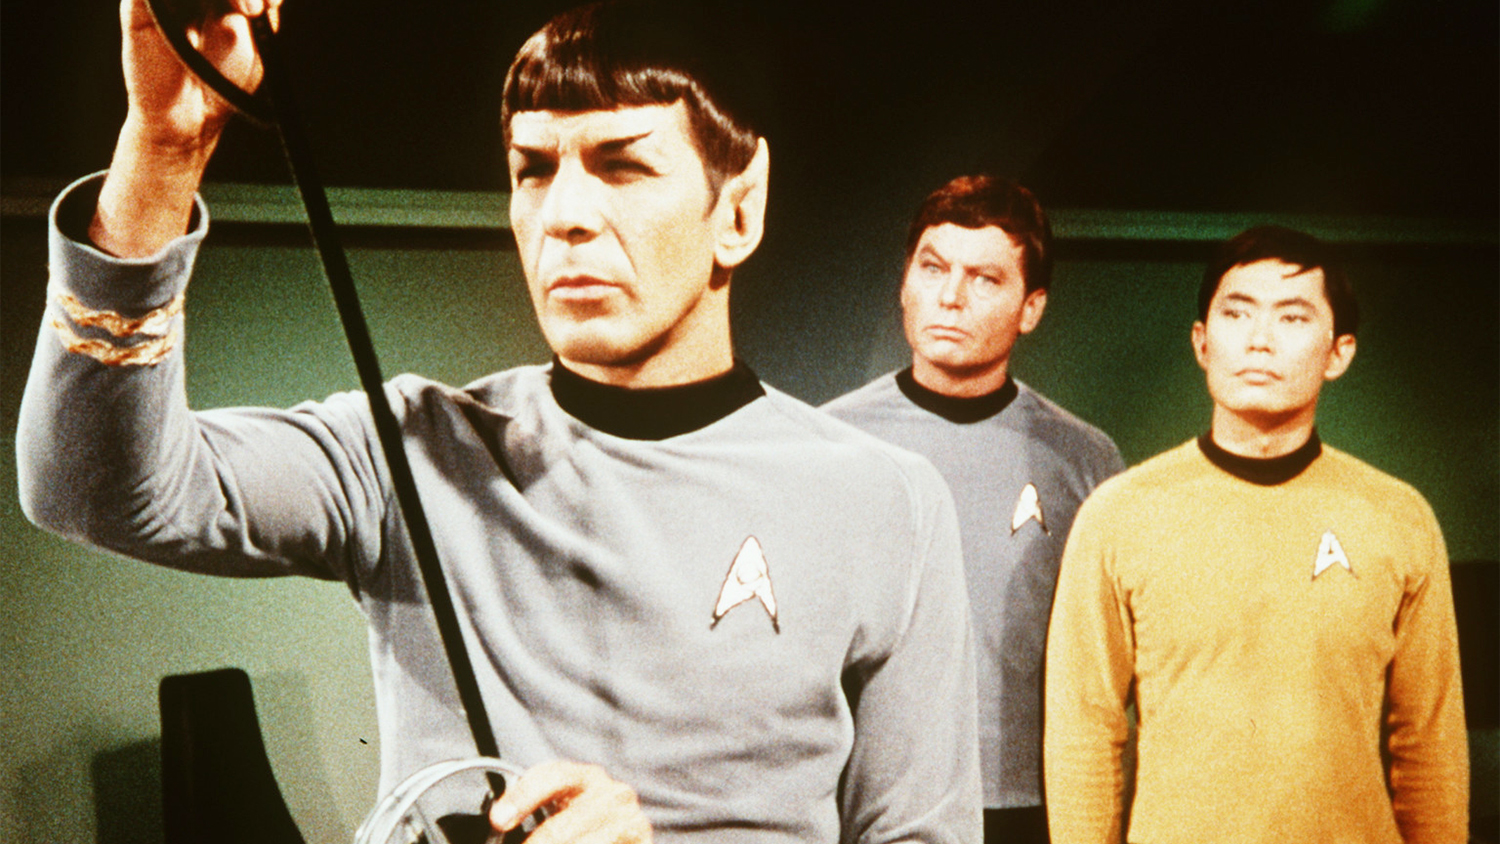 spock film loop promo from star trek tv show